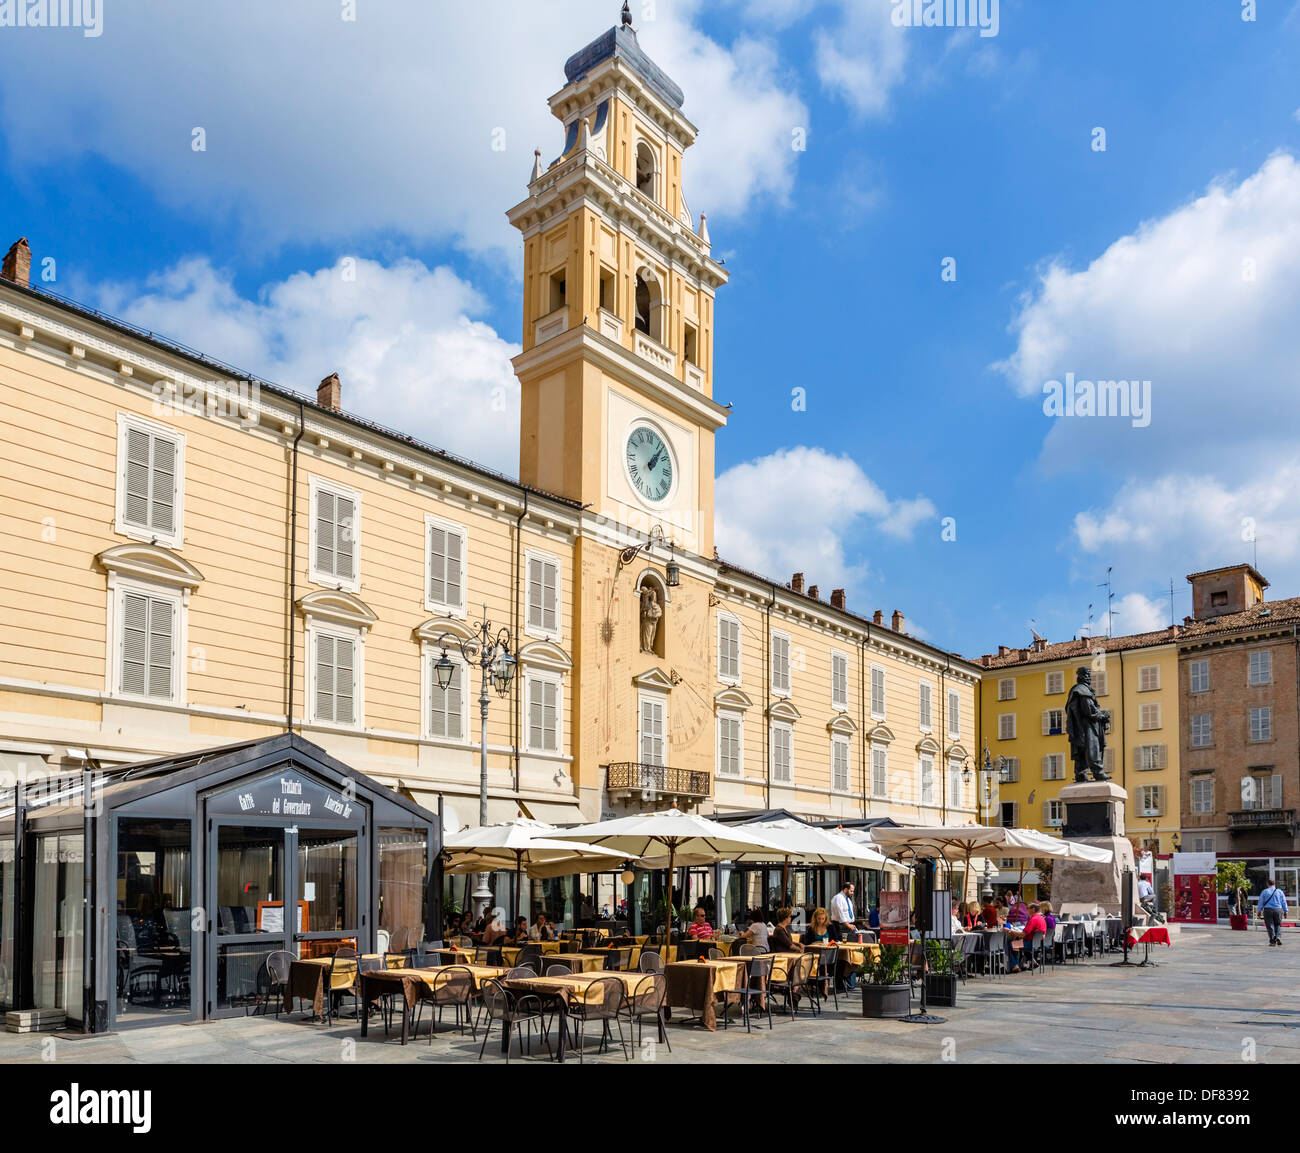 Restaurant vor dem Palazzo del Governatore im Zentrum historischen Stadt, Piazza Garibaldi, Parma, Emilia Romagna, Italien Stockfoto